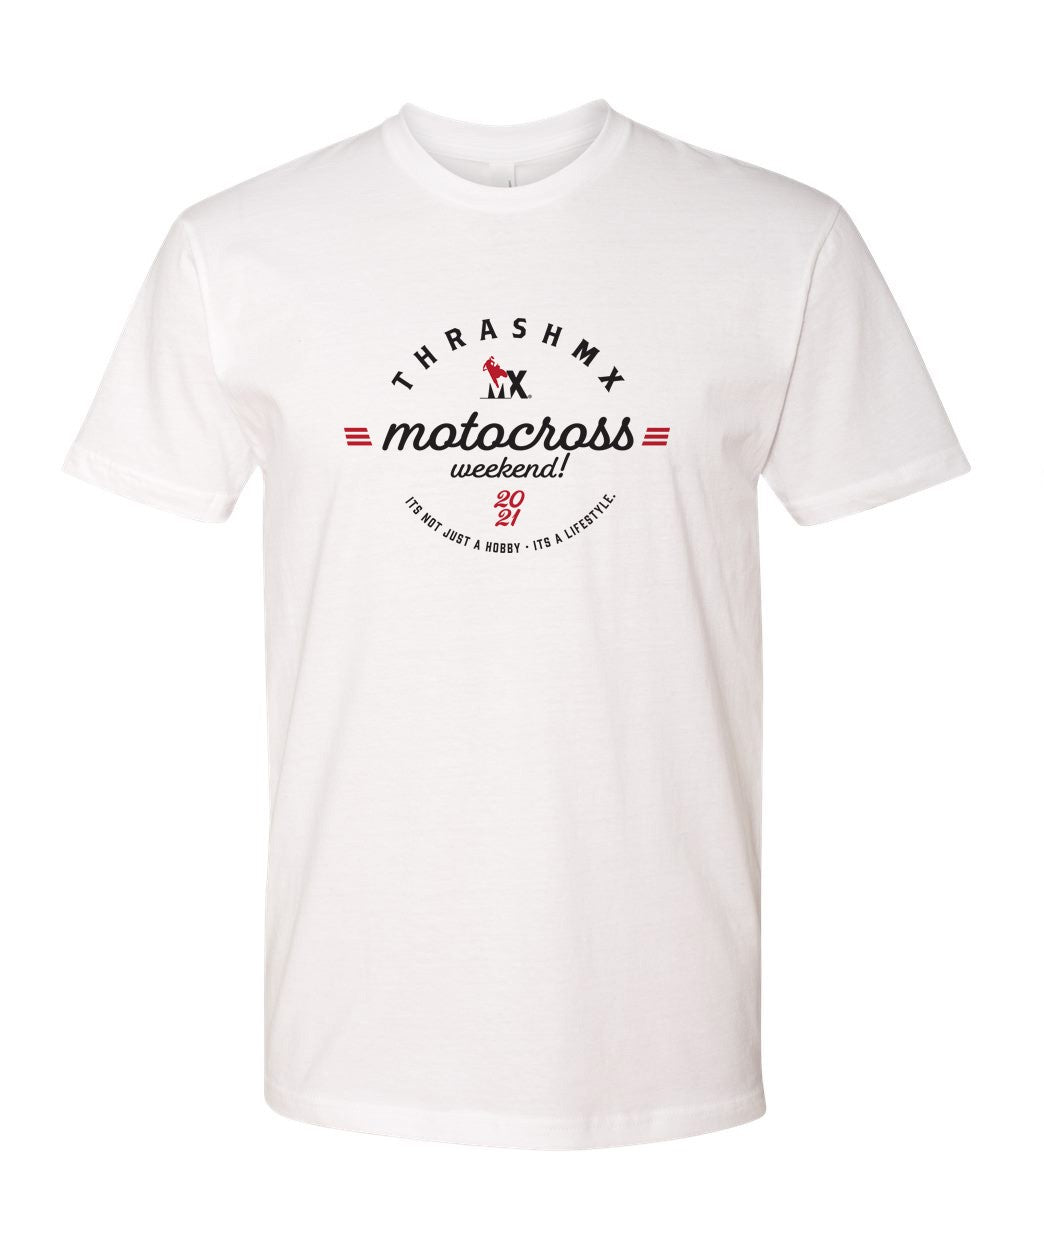 Motocross weekend T-shirt white